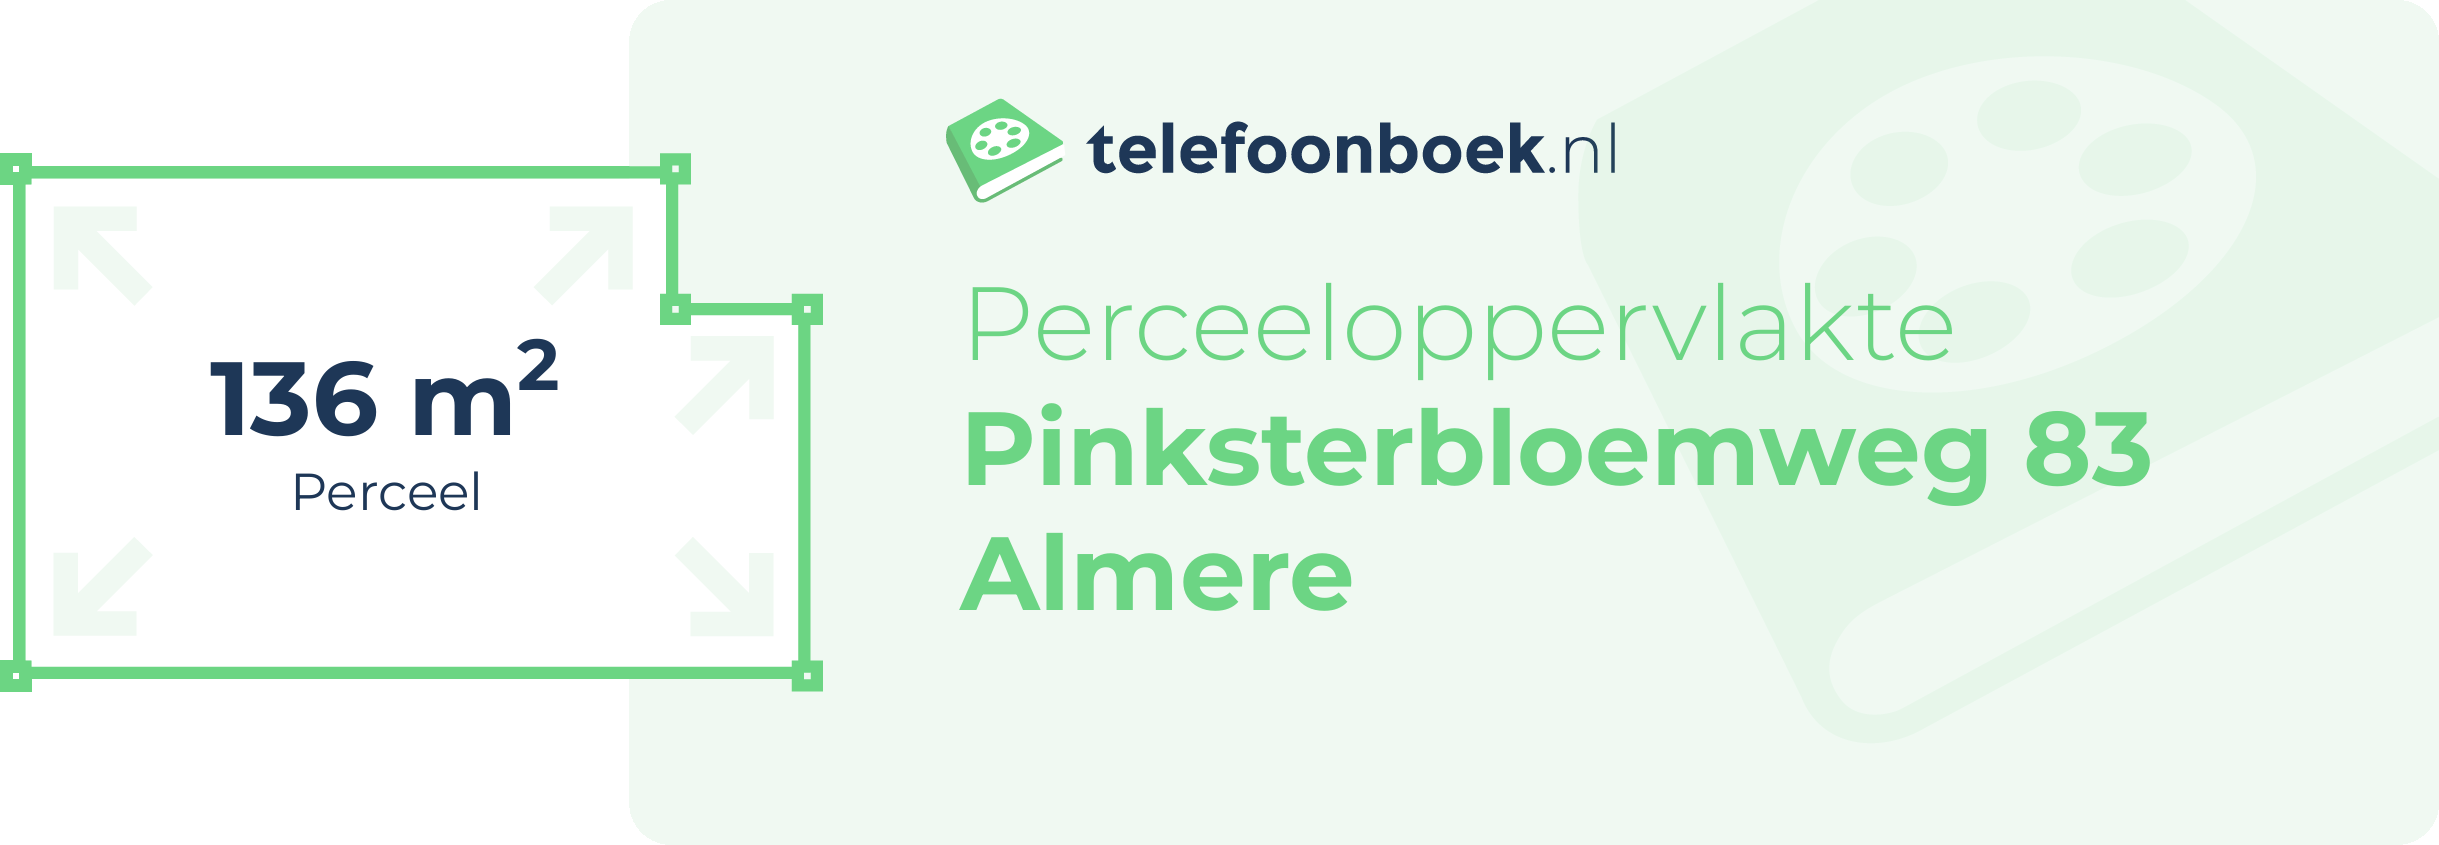 Perceeloppervlakte Pinksterbloemweg 83 Almere